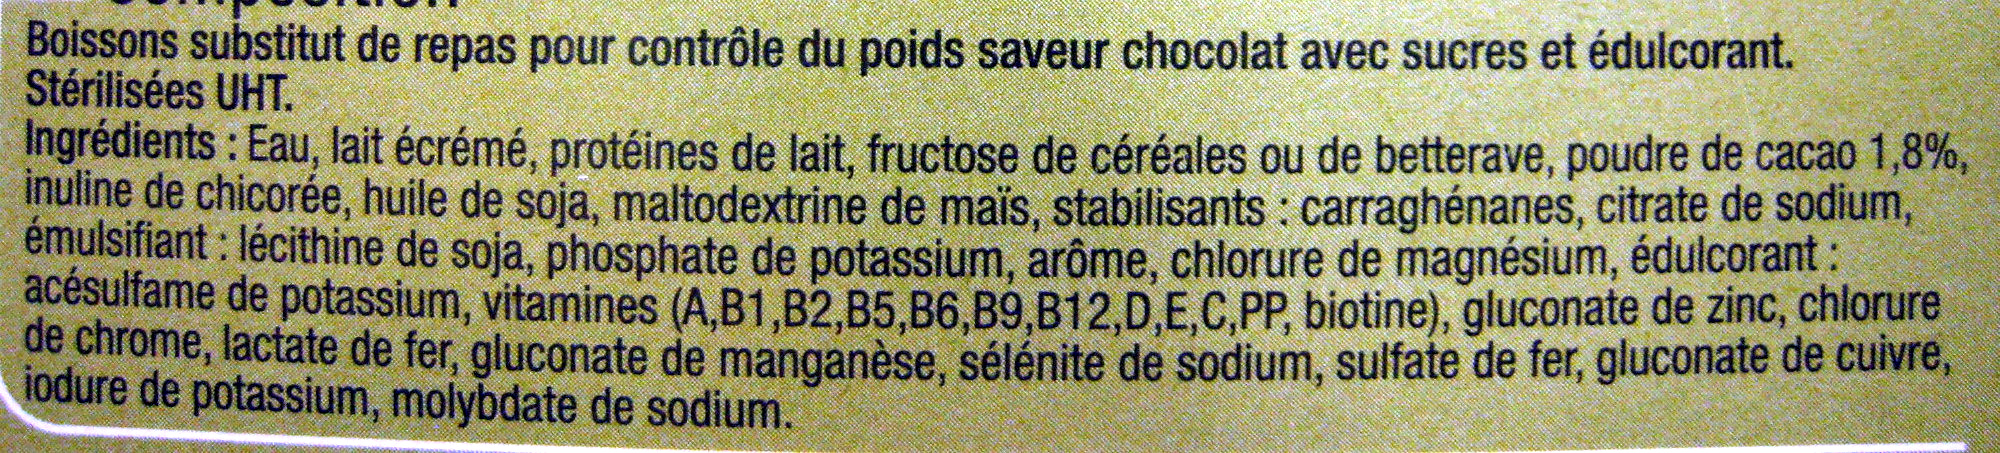 Milk-Shake substitut de repas, saveur chocolat (x 3) - Ingredients - fr